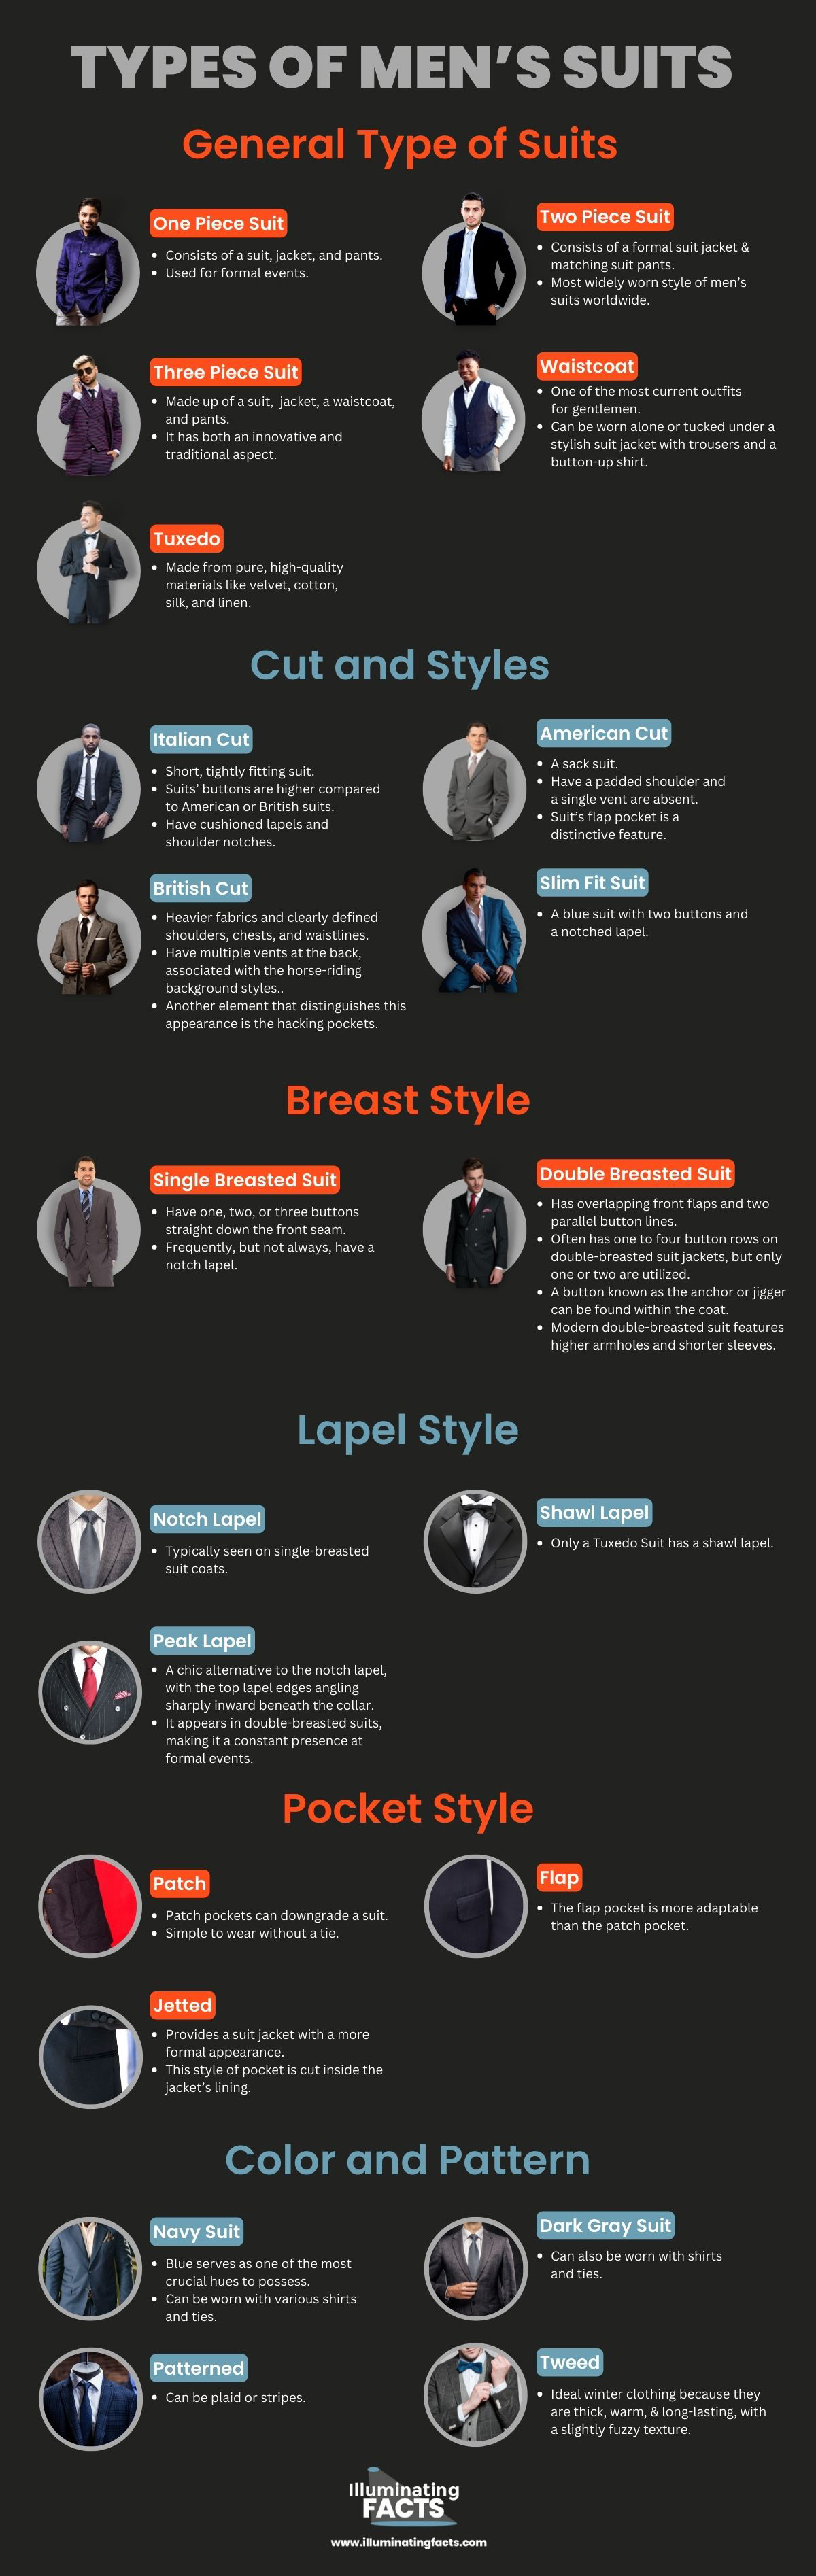 Types of Men’s Suits